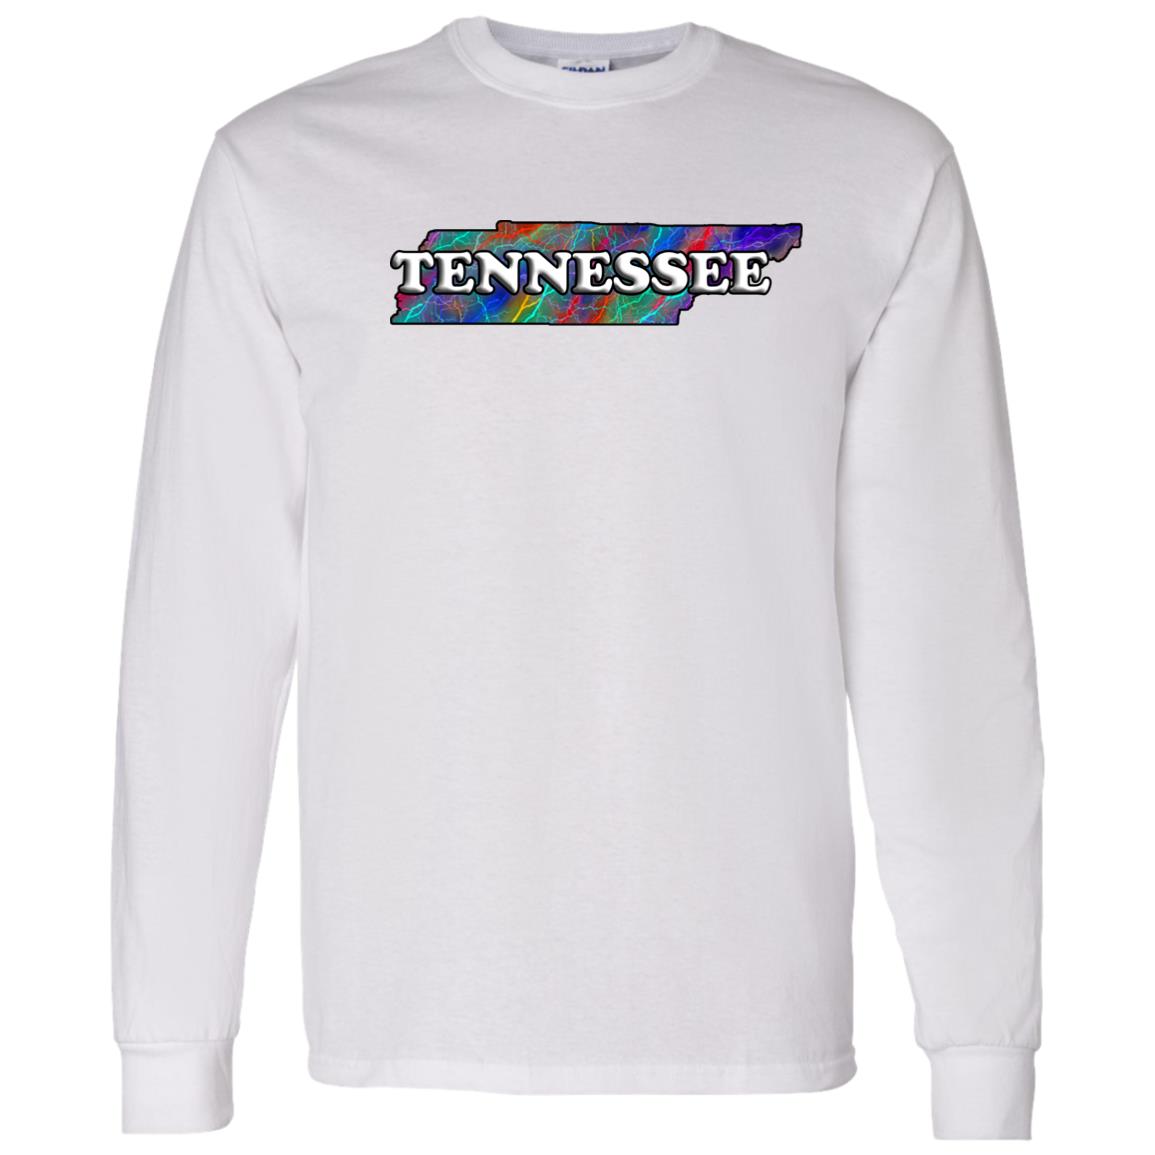 Tennessee Long Sleeve T-Shirt